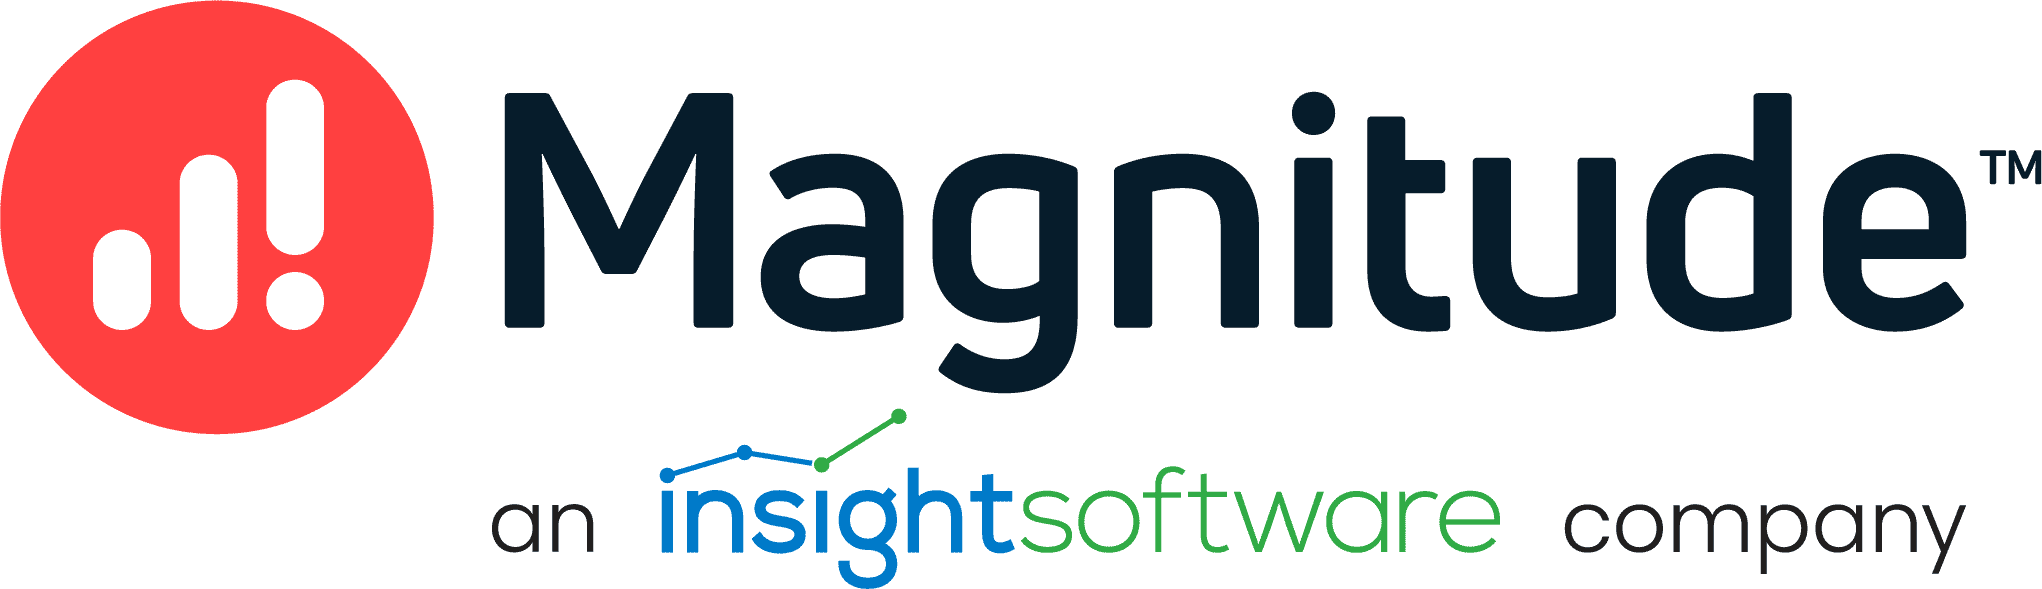 Magnitude Software, an insightsoftware company